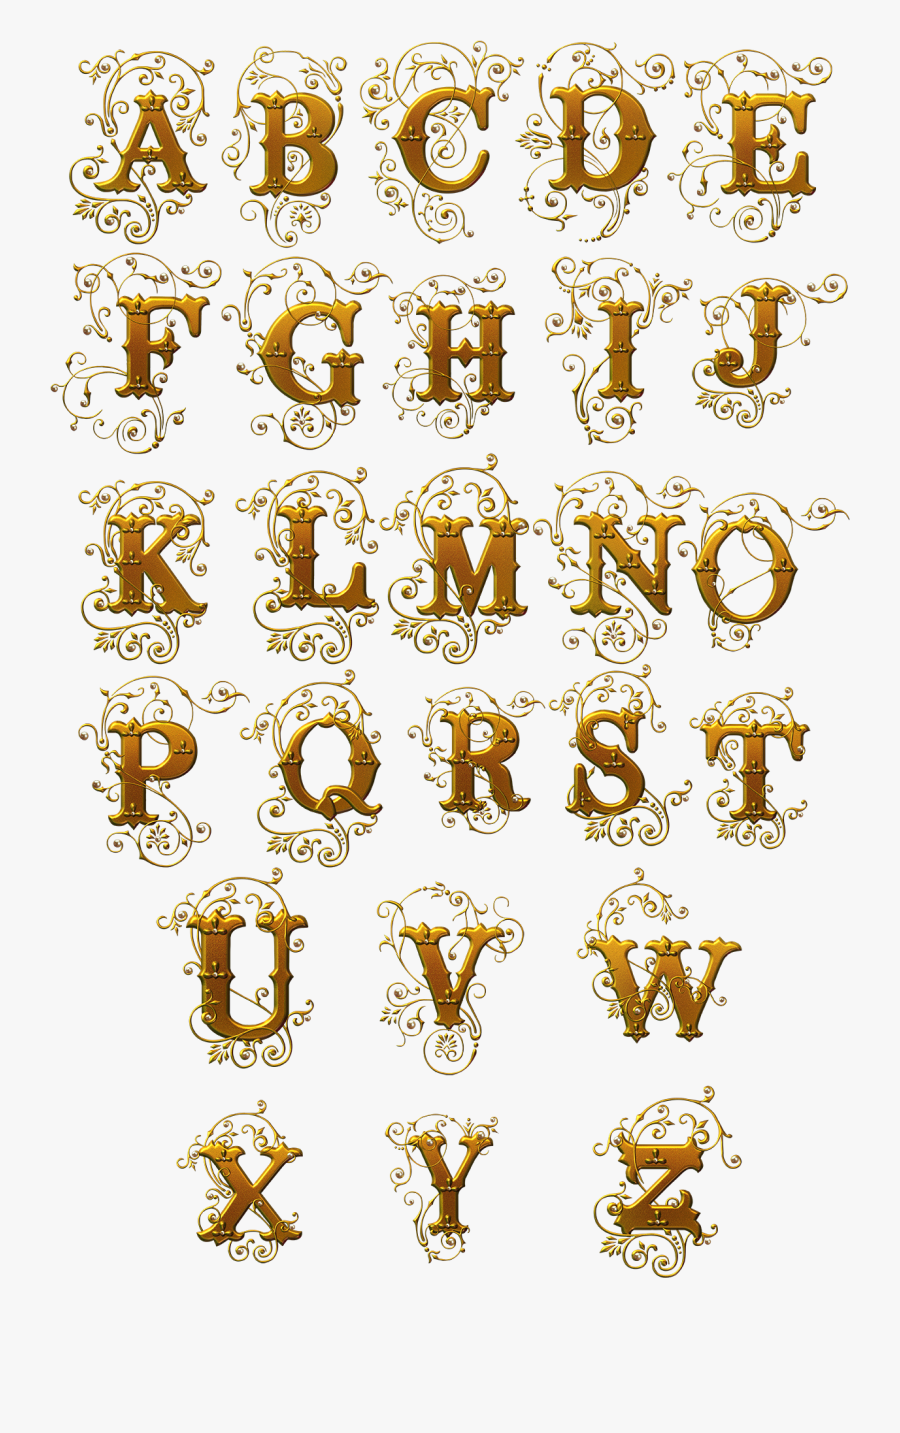 Typeface Letters Gold Letter Effect Download Hd Png, Transparent Clipart